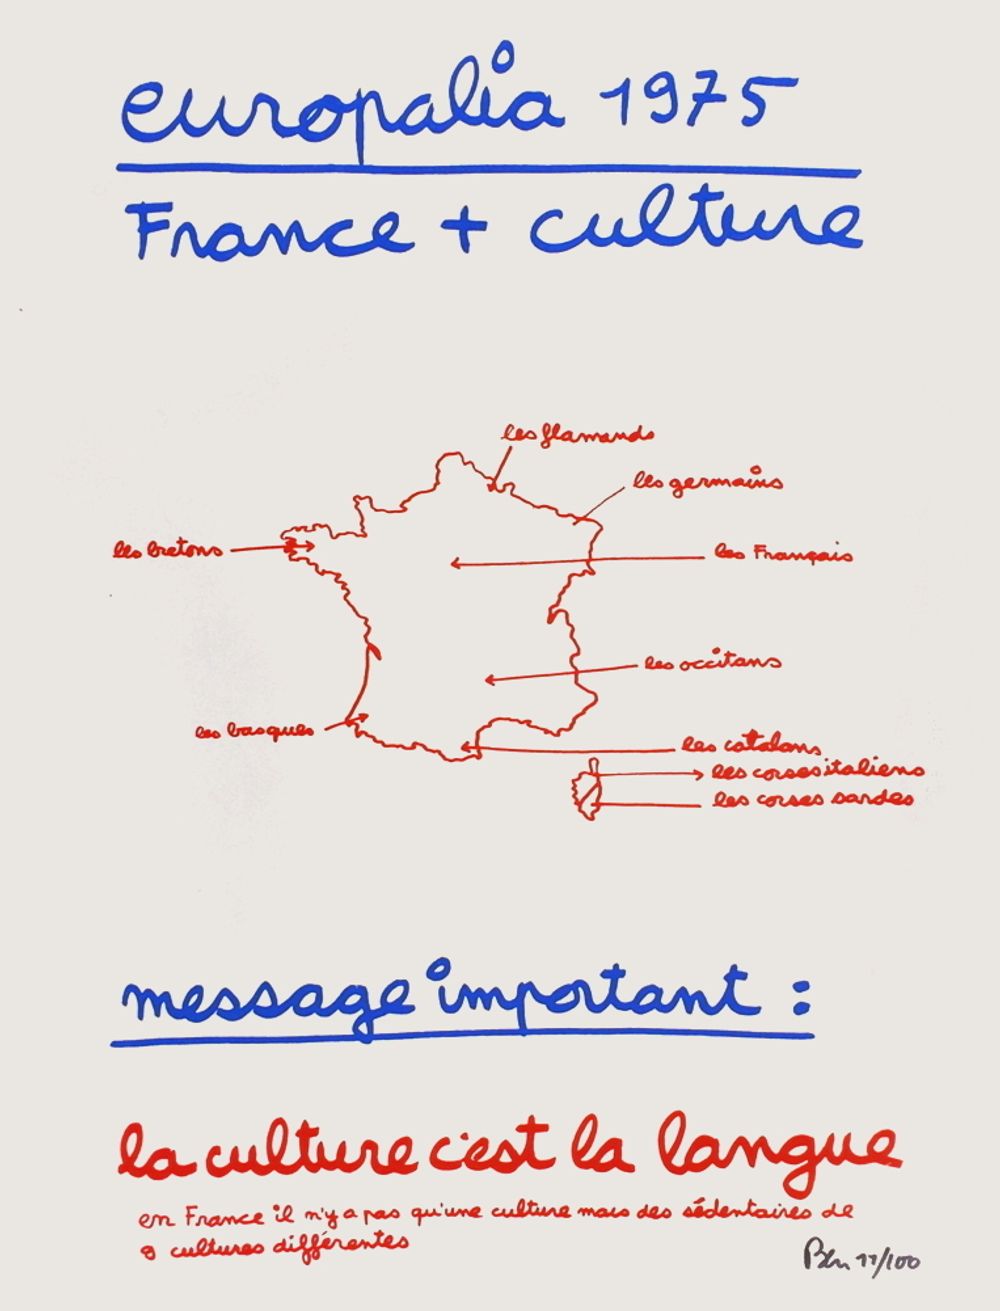 Europalia 1975 - France + Culture